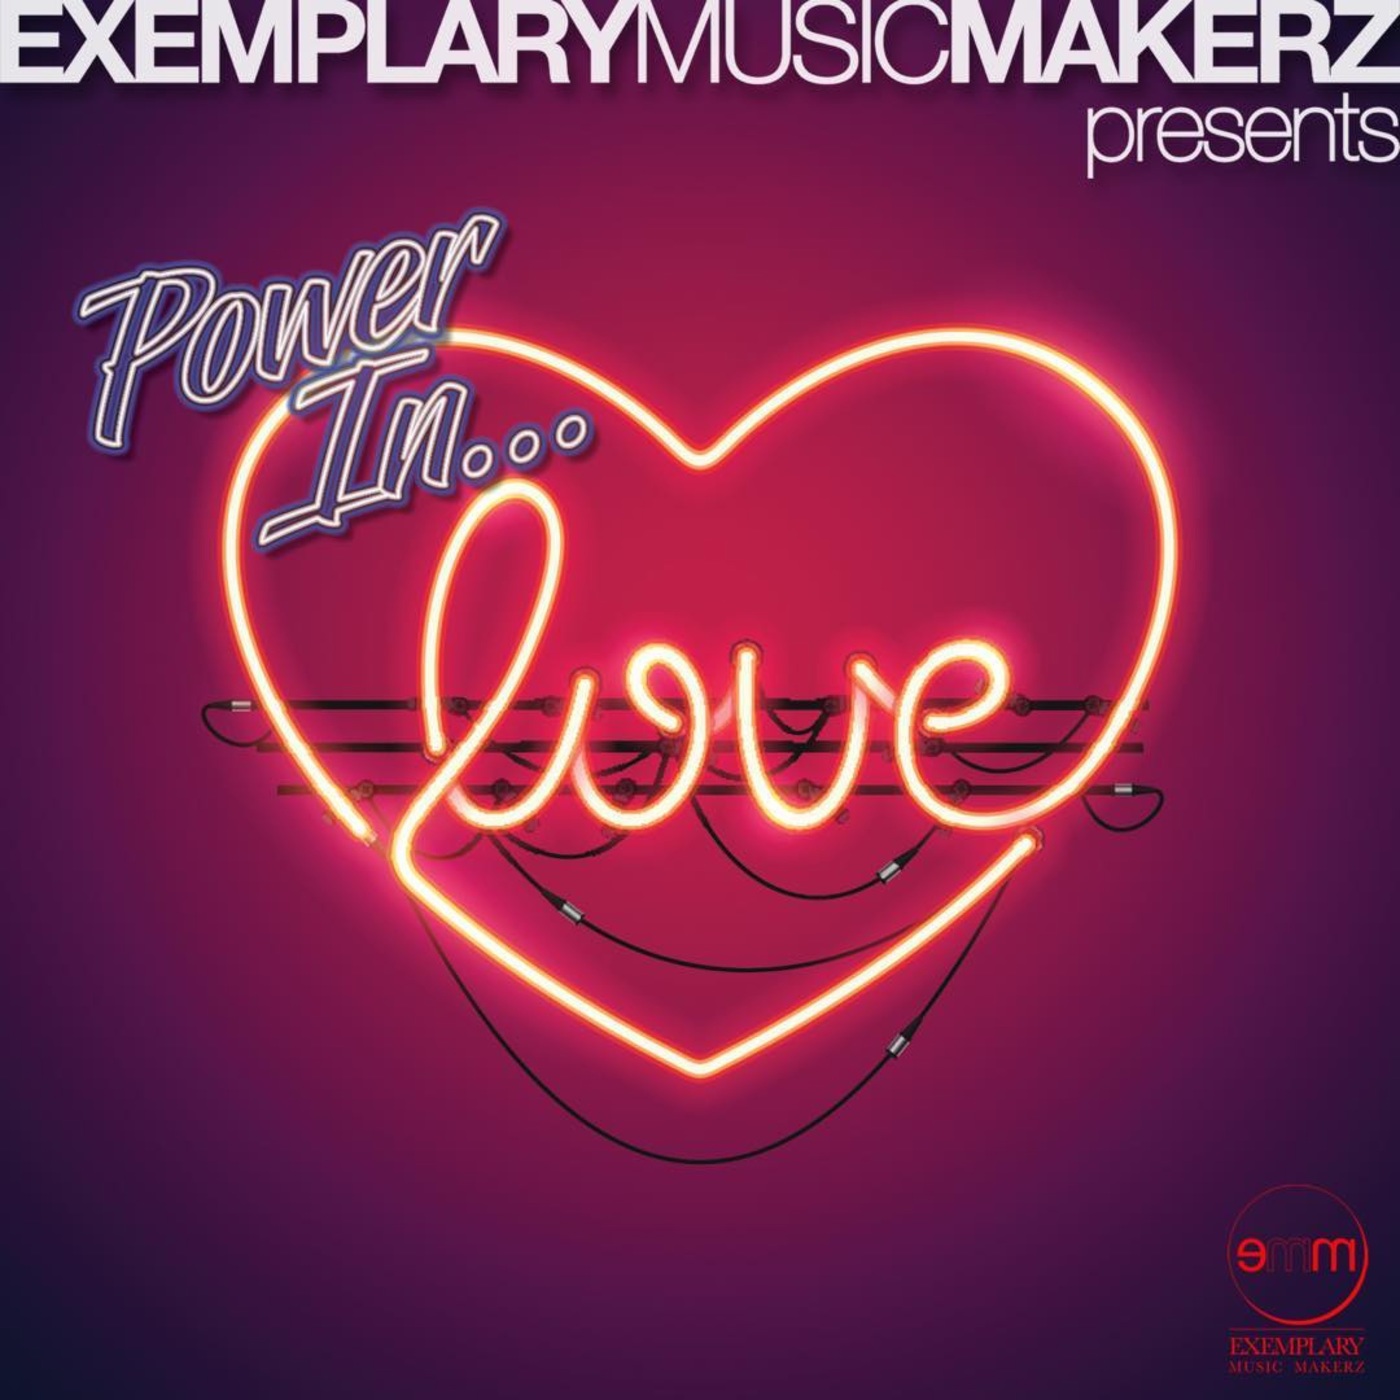 Muzikman Edition - Power In Love / Exemplary Music Makerz